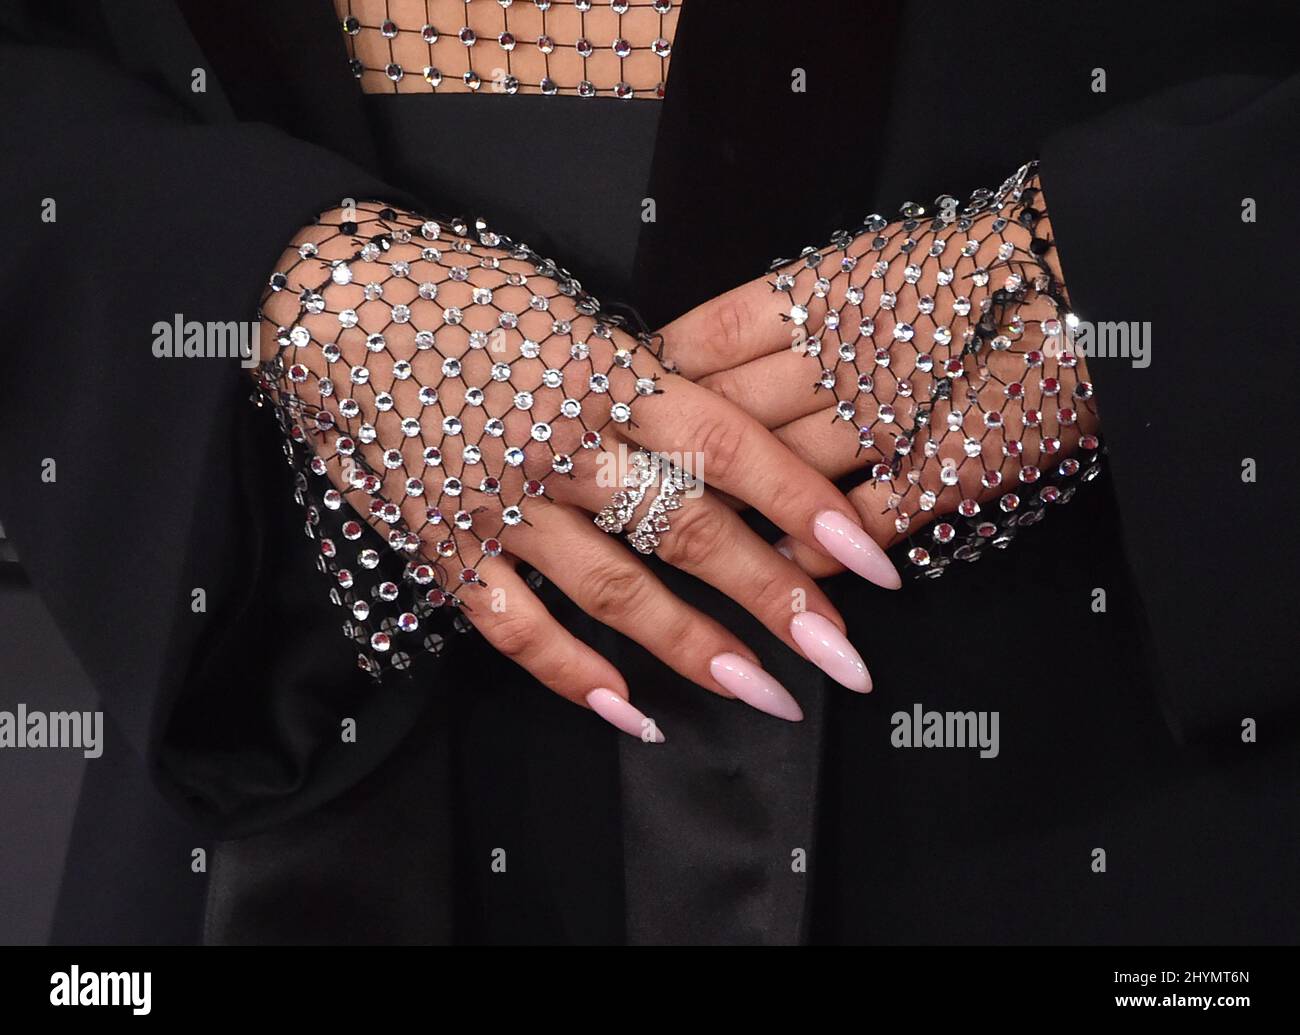 Bebe Rexha attending the 2020 GRAMMY Awards held at Staples Center in ...